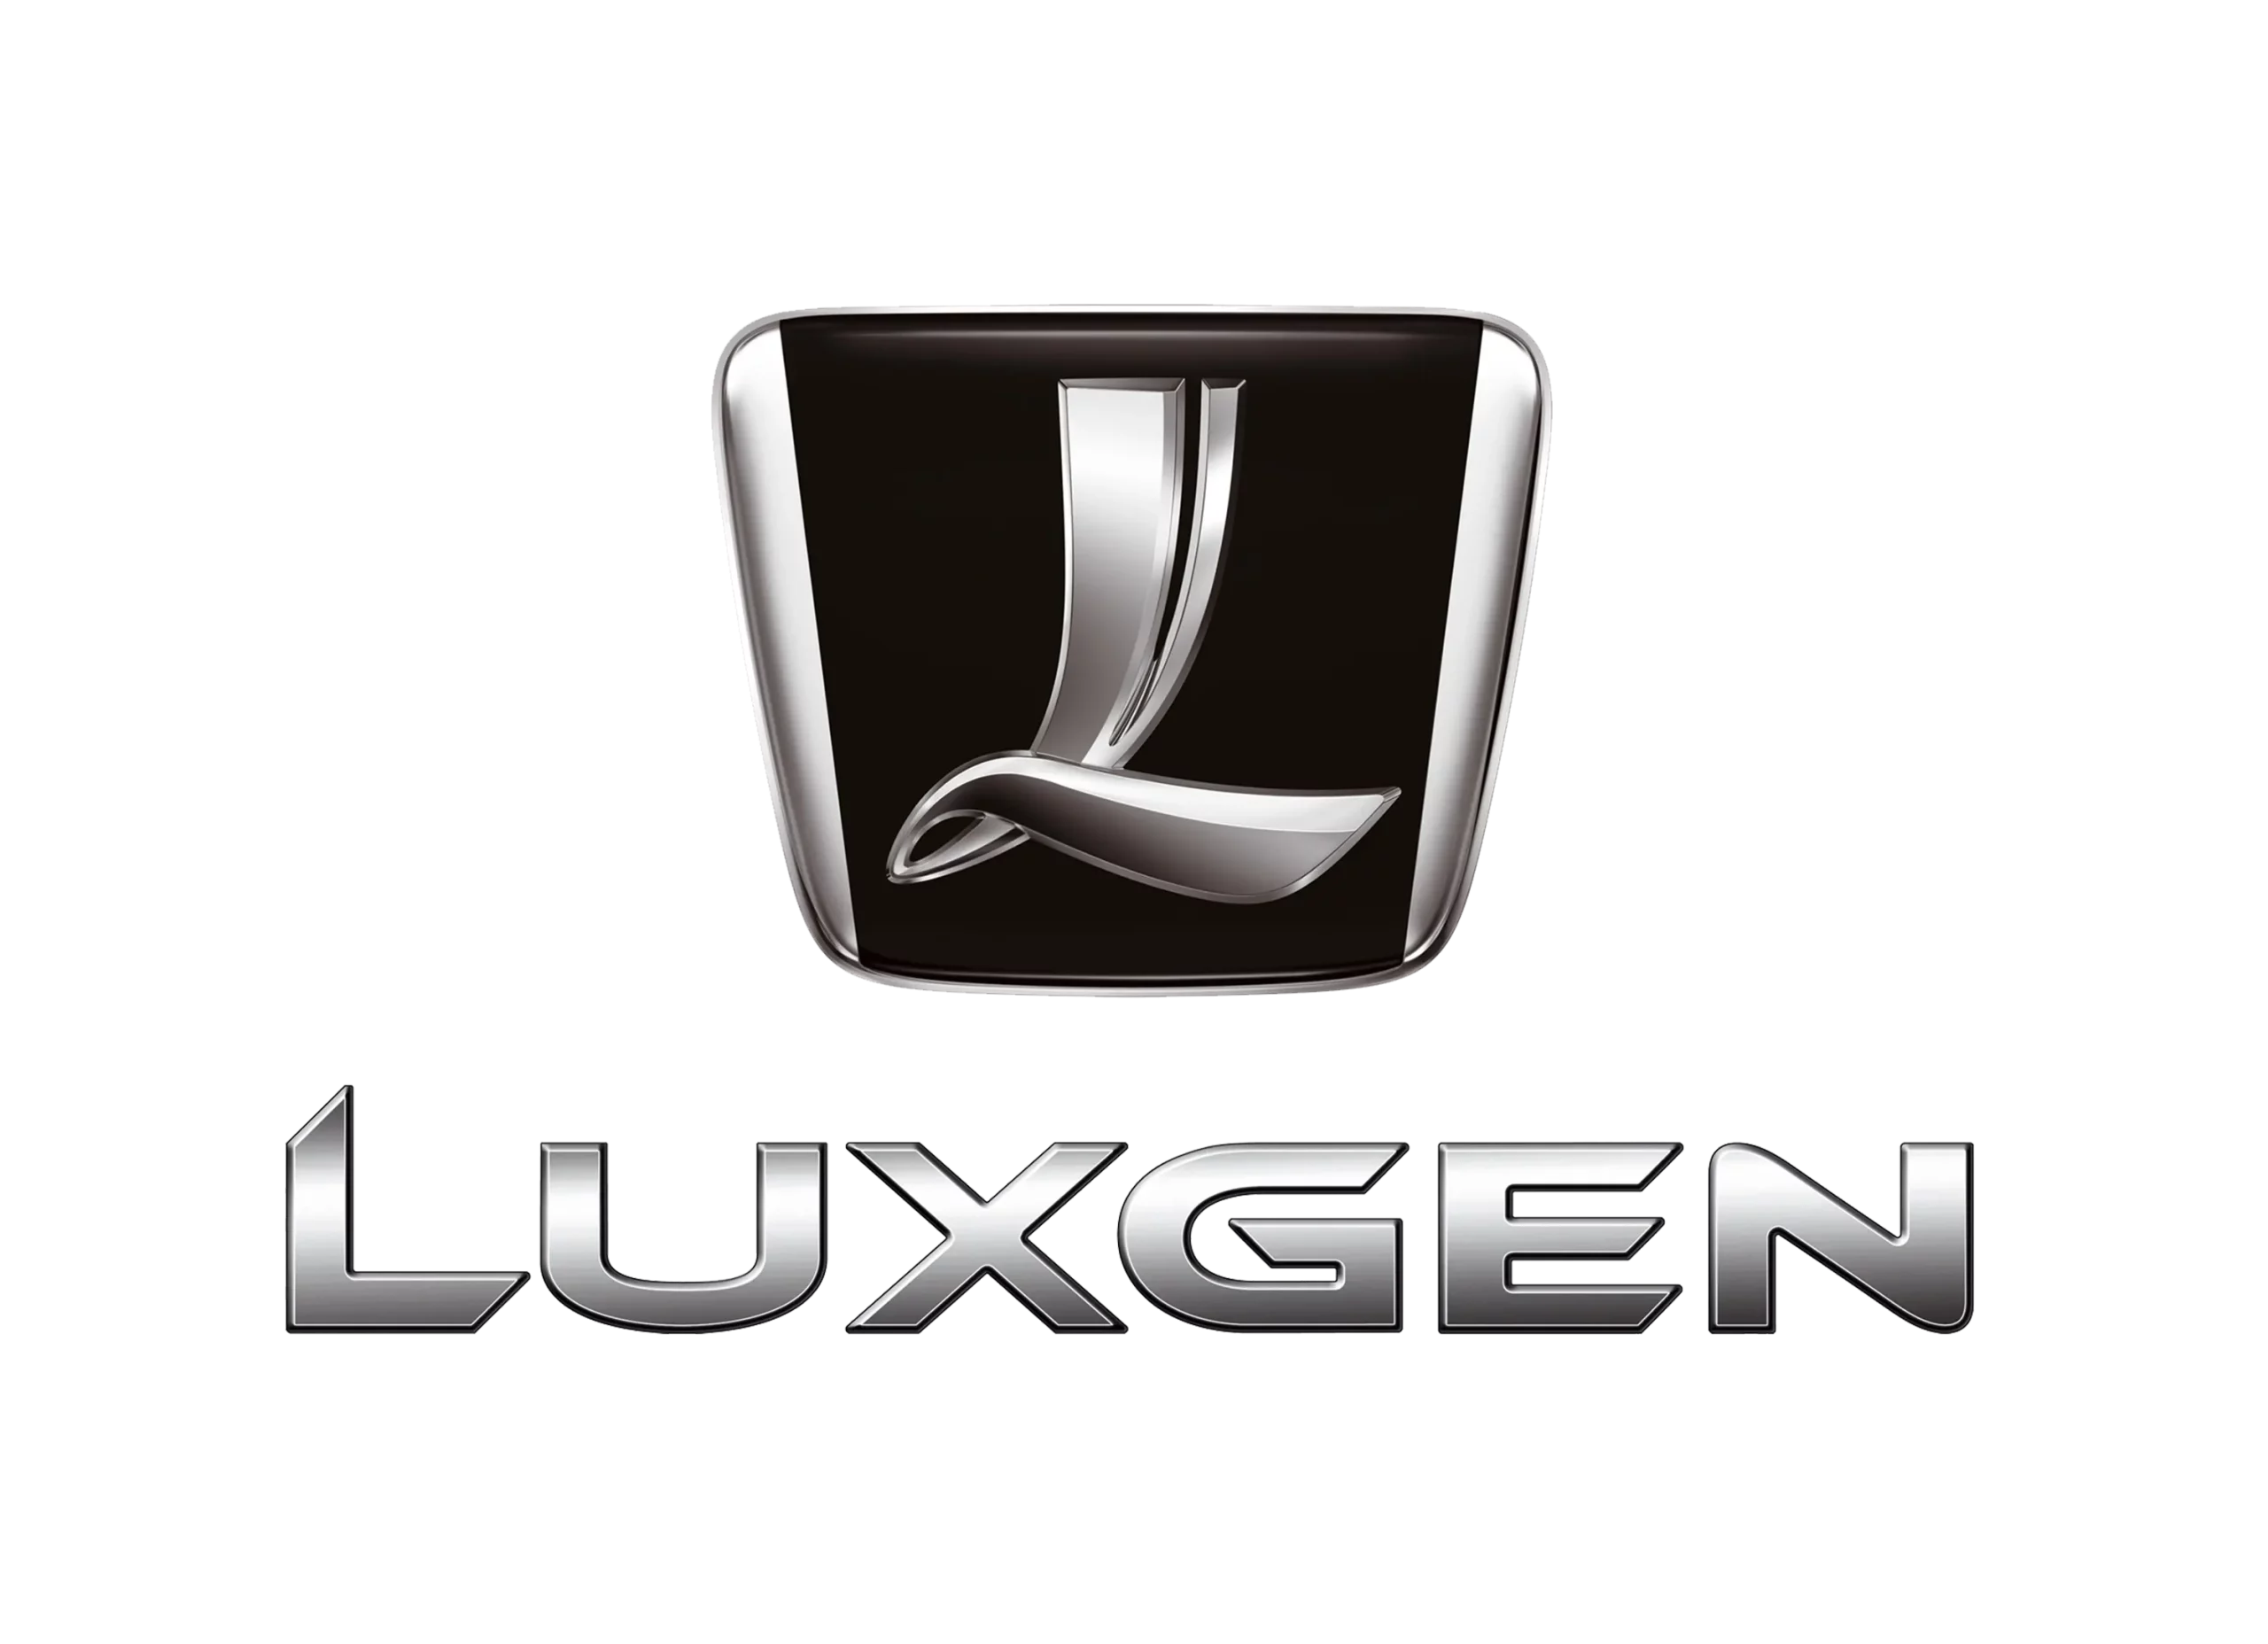 Luxgen logo 2009-present